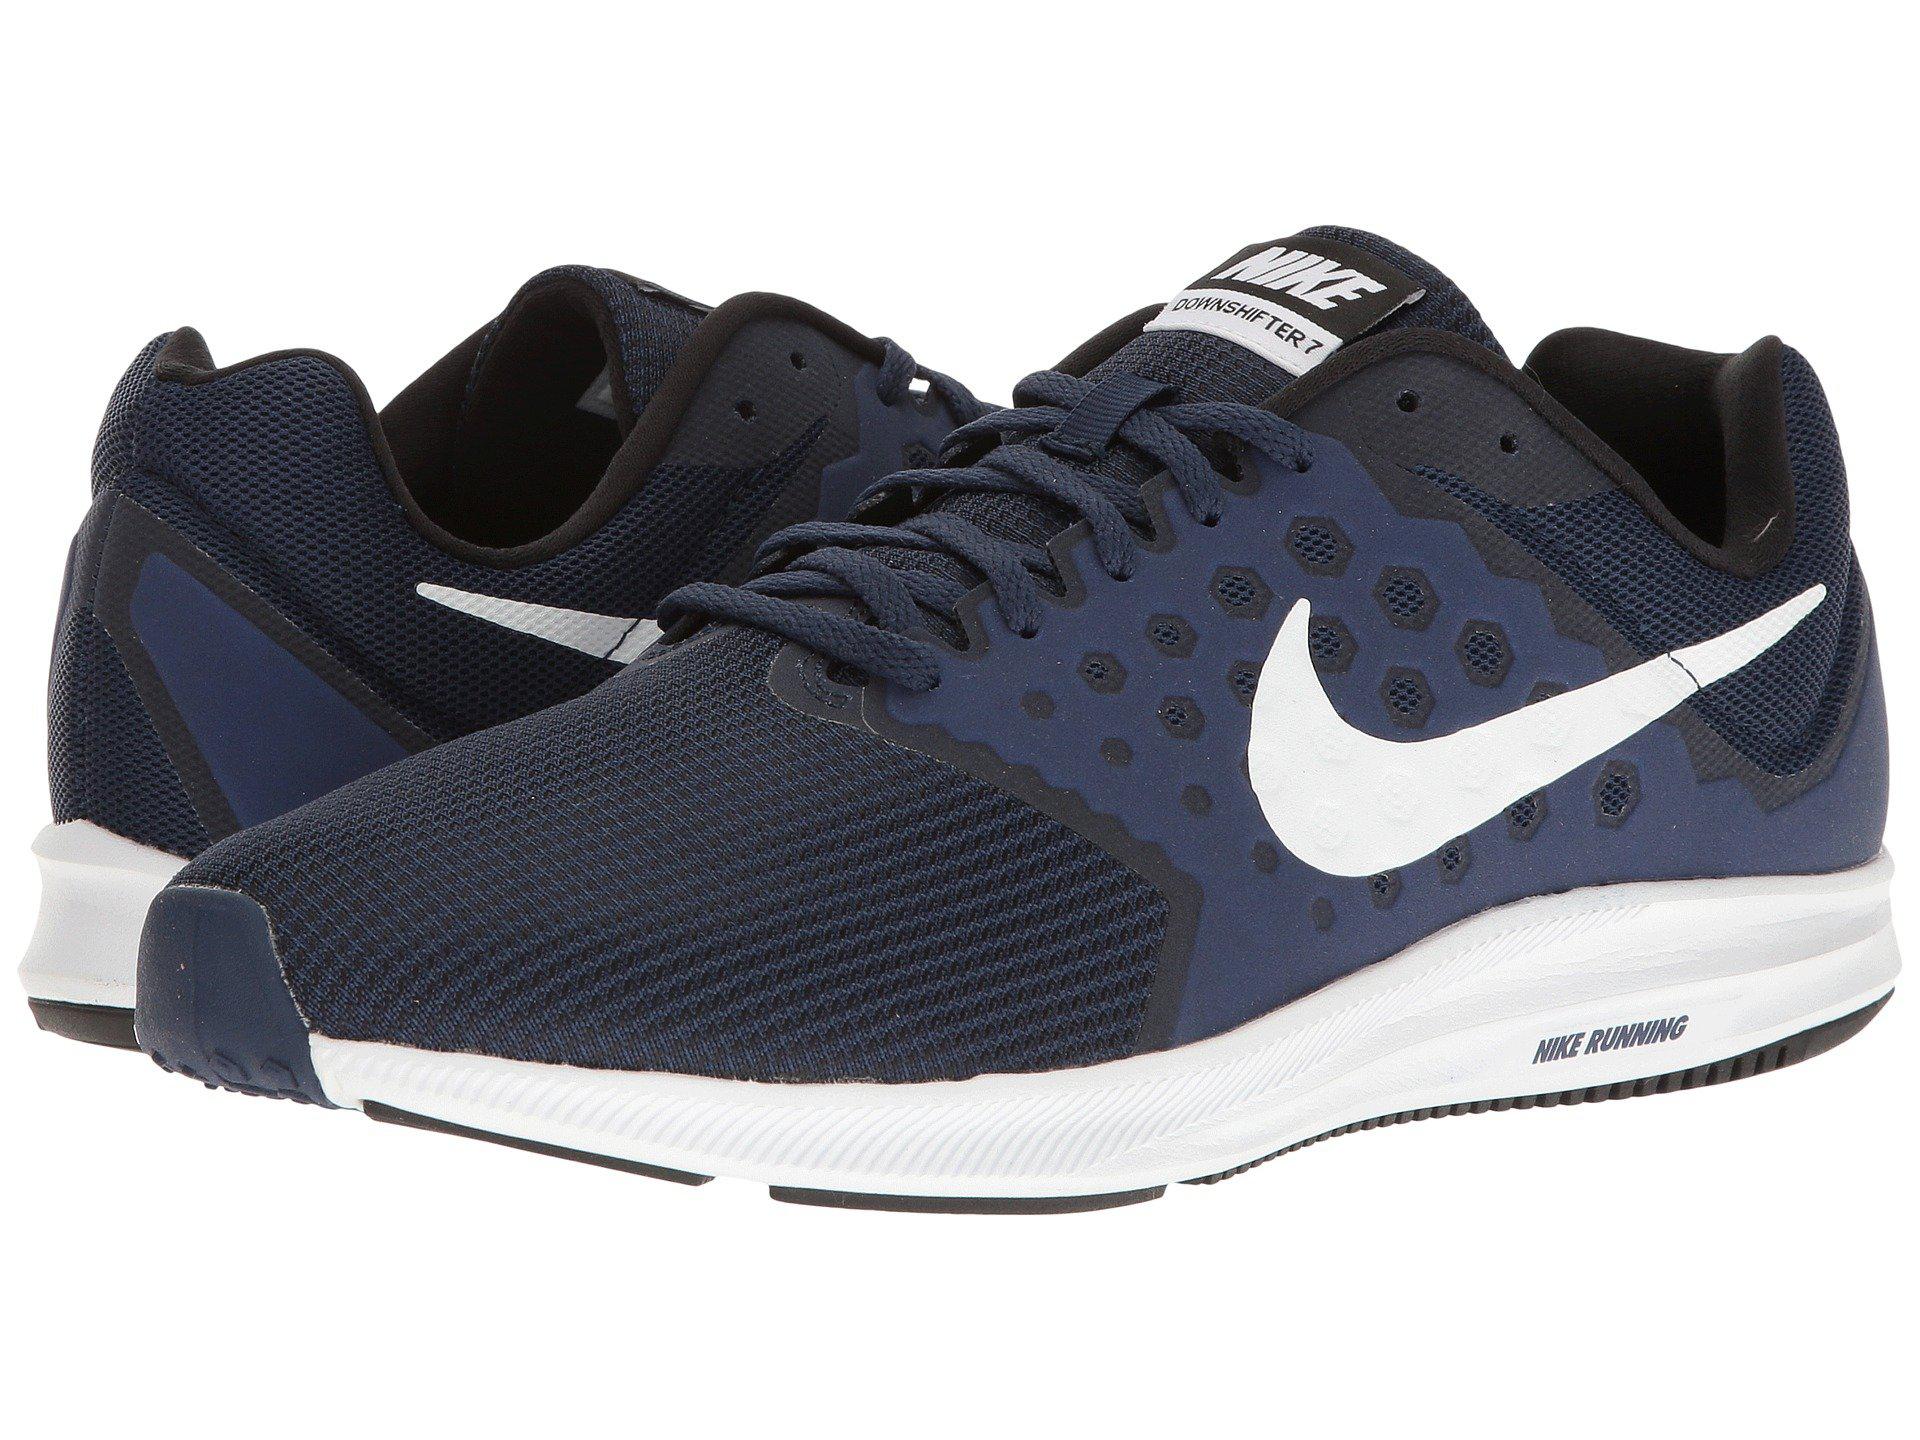 Lyst - Nike Downshifter 7 (midnight Navy/white/dark Obsidian/black) Men's Running Shoes in Blue 